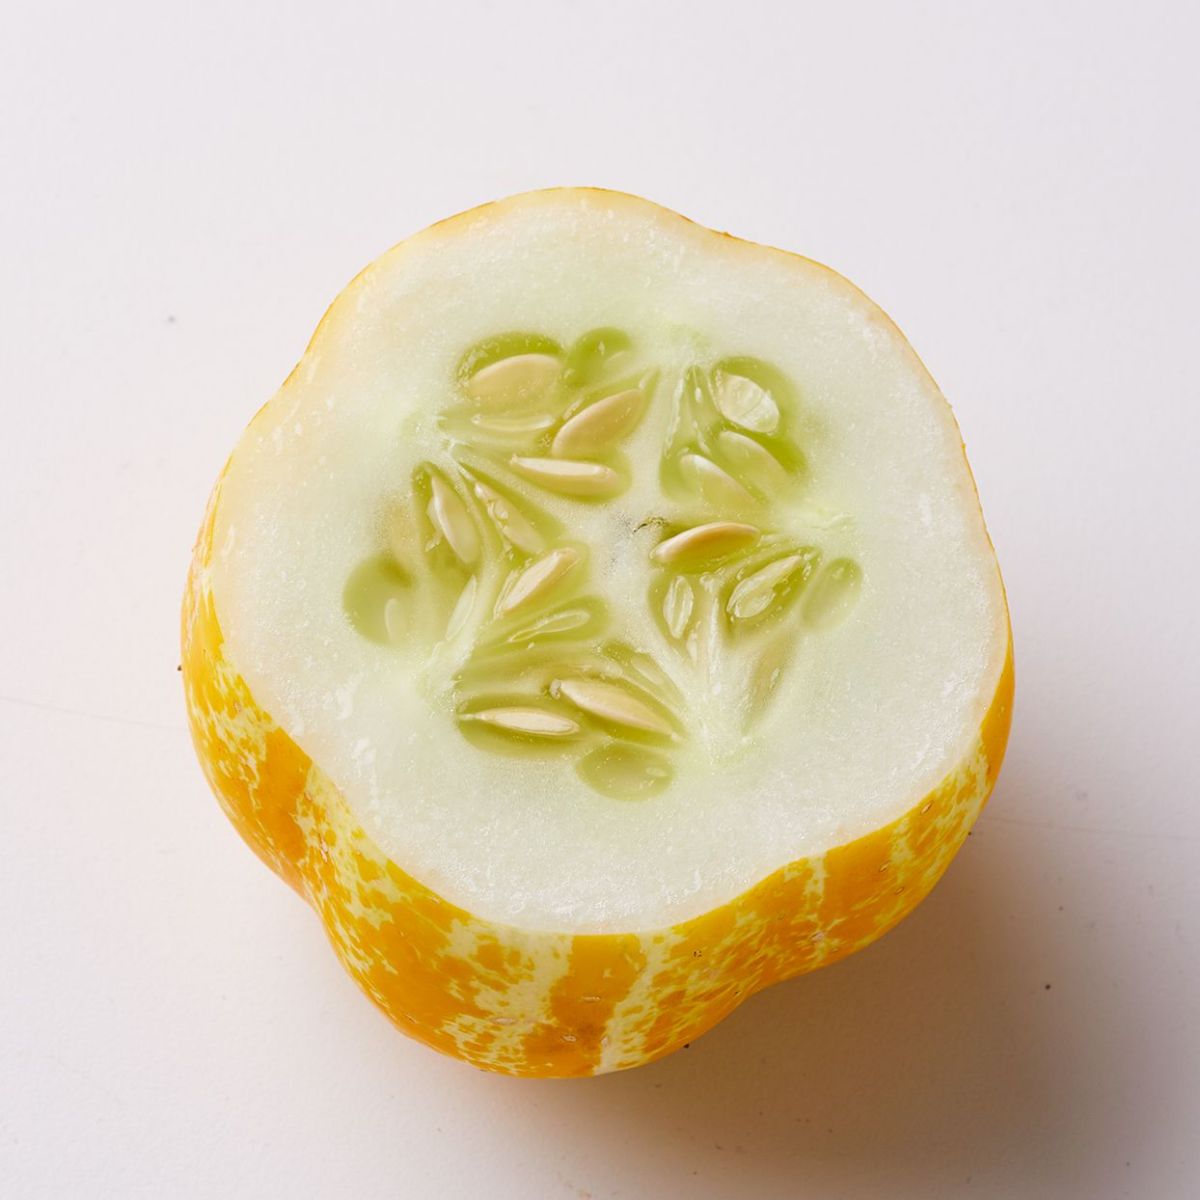 sliced yellow cucumber